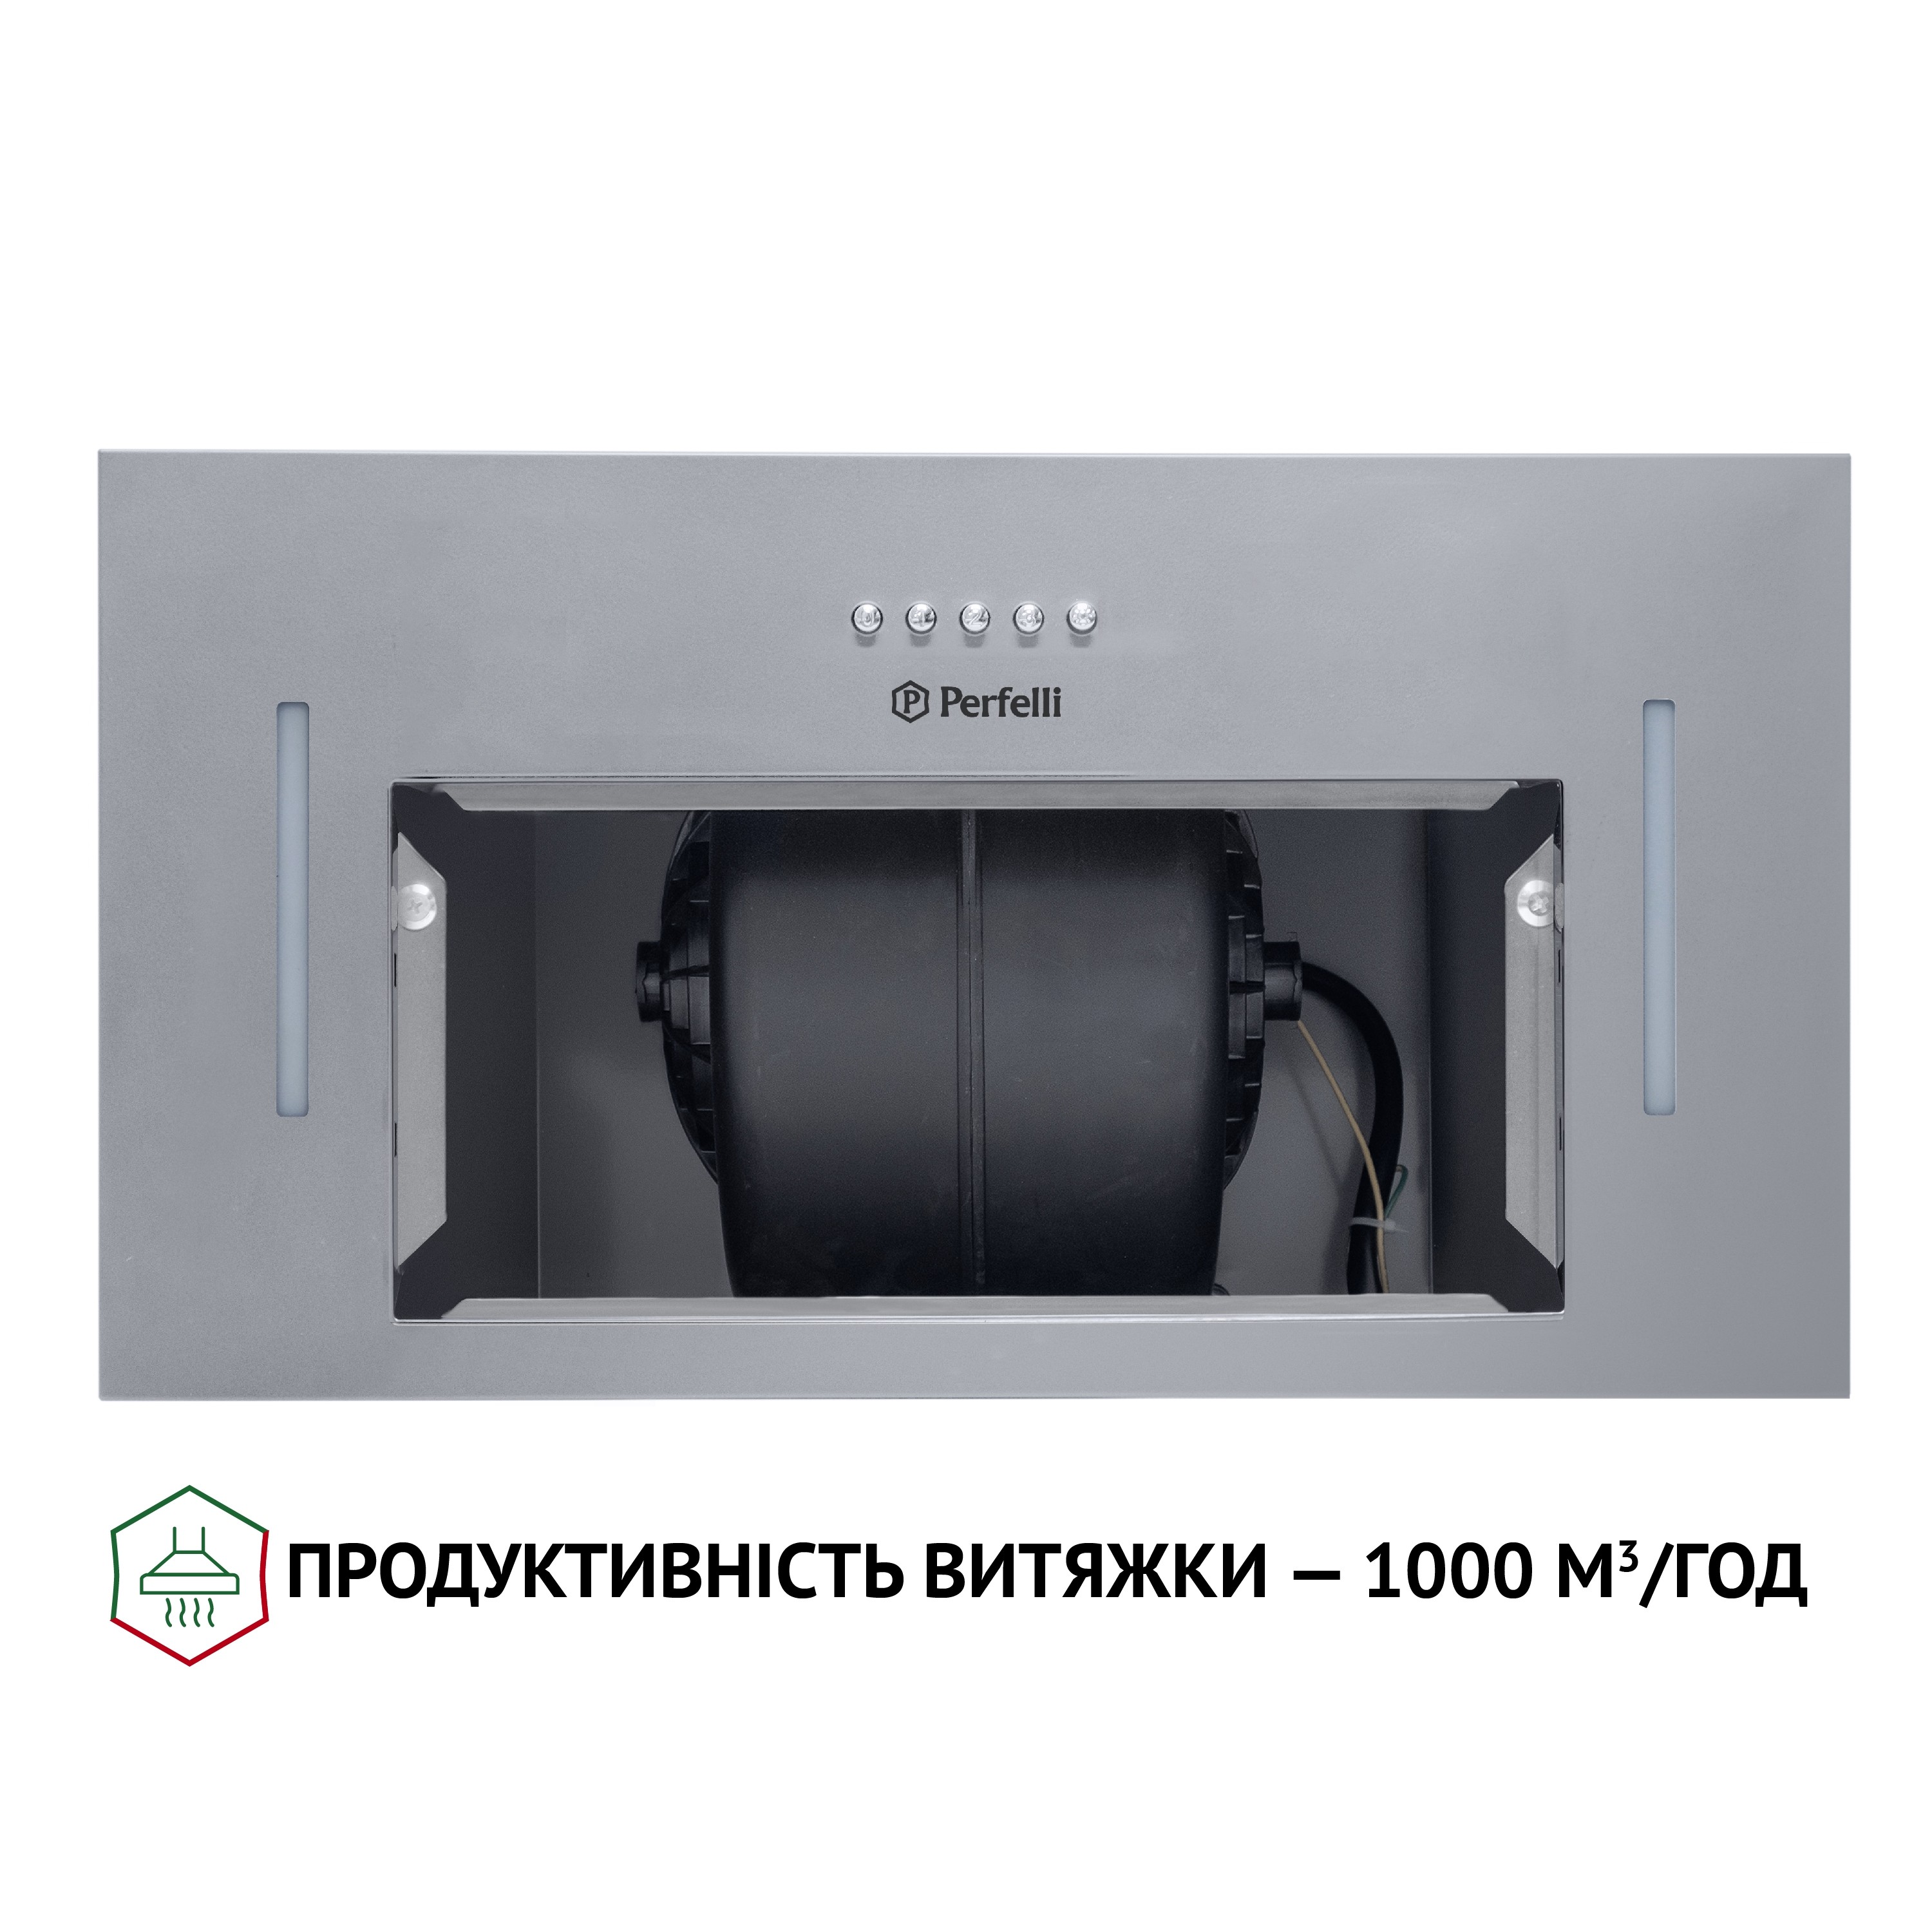 Кухонная вытяжка Perfelli BI 5653 I 1000 LED характеристики - фотография 7